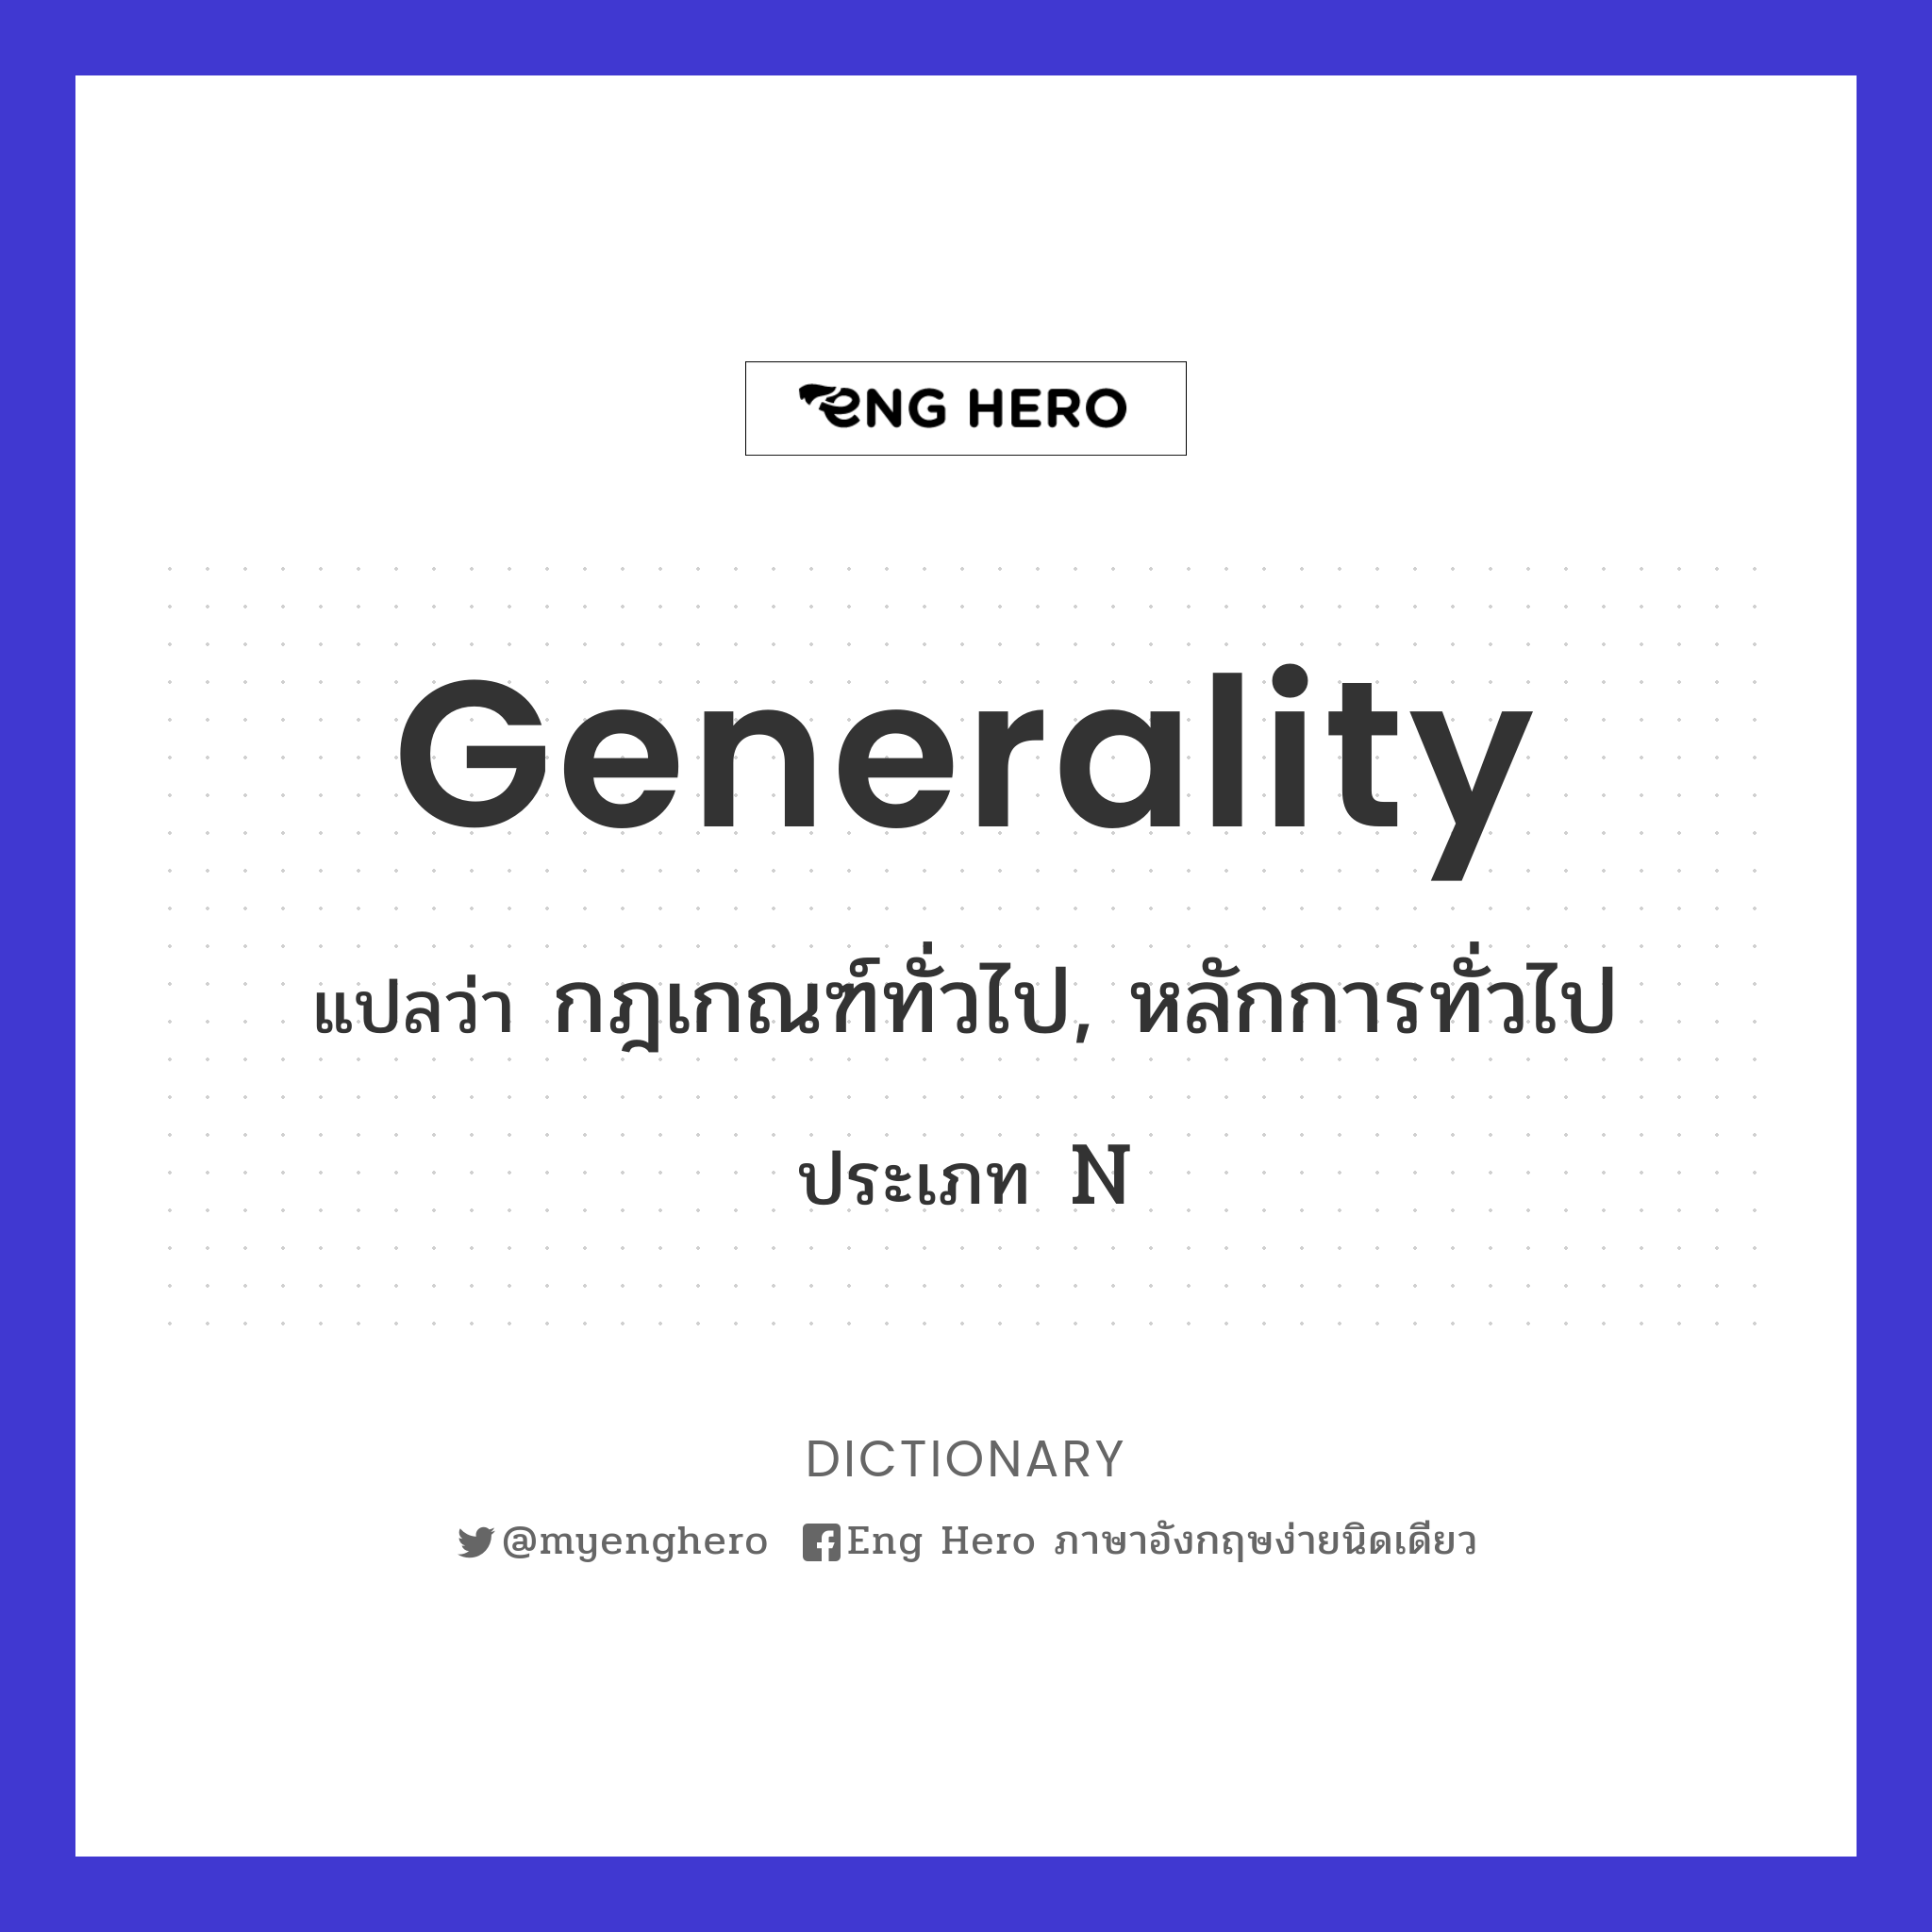 generality